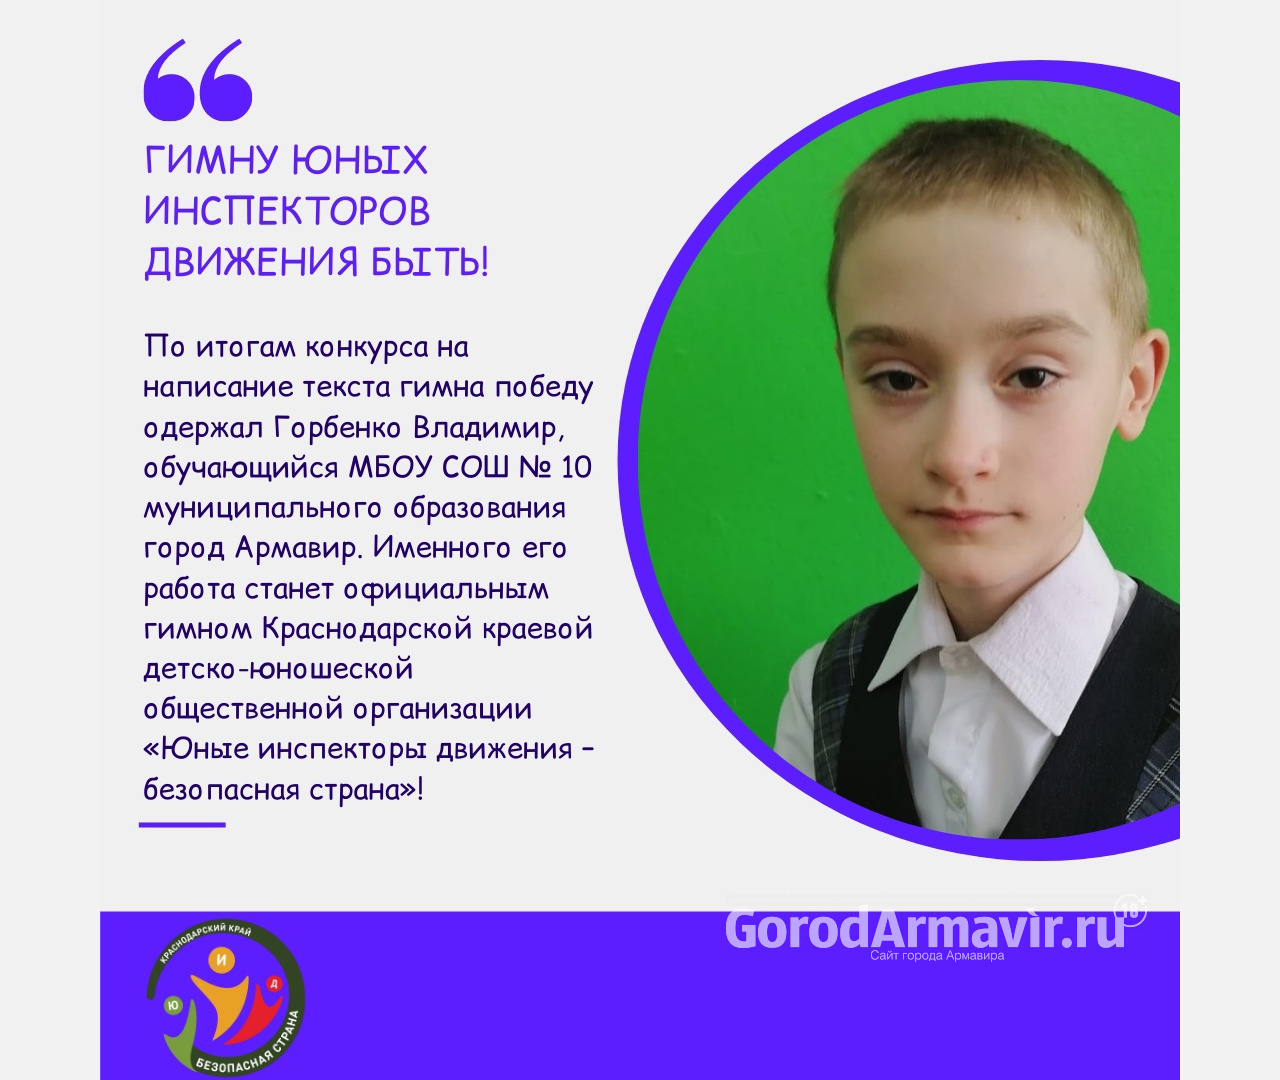 Ученик школы № 10 Армавира Владимир Горбенко стал автором гимна 